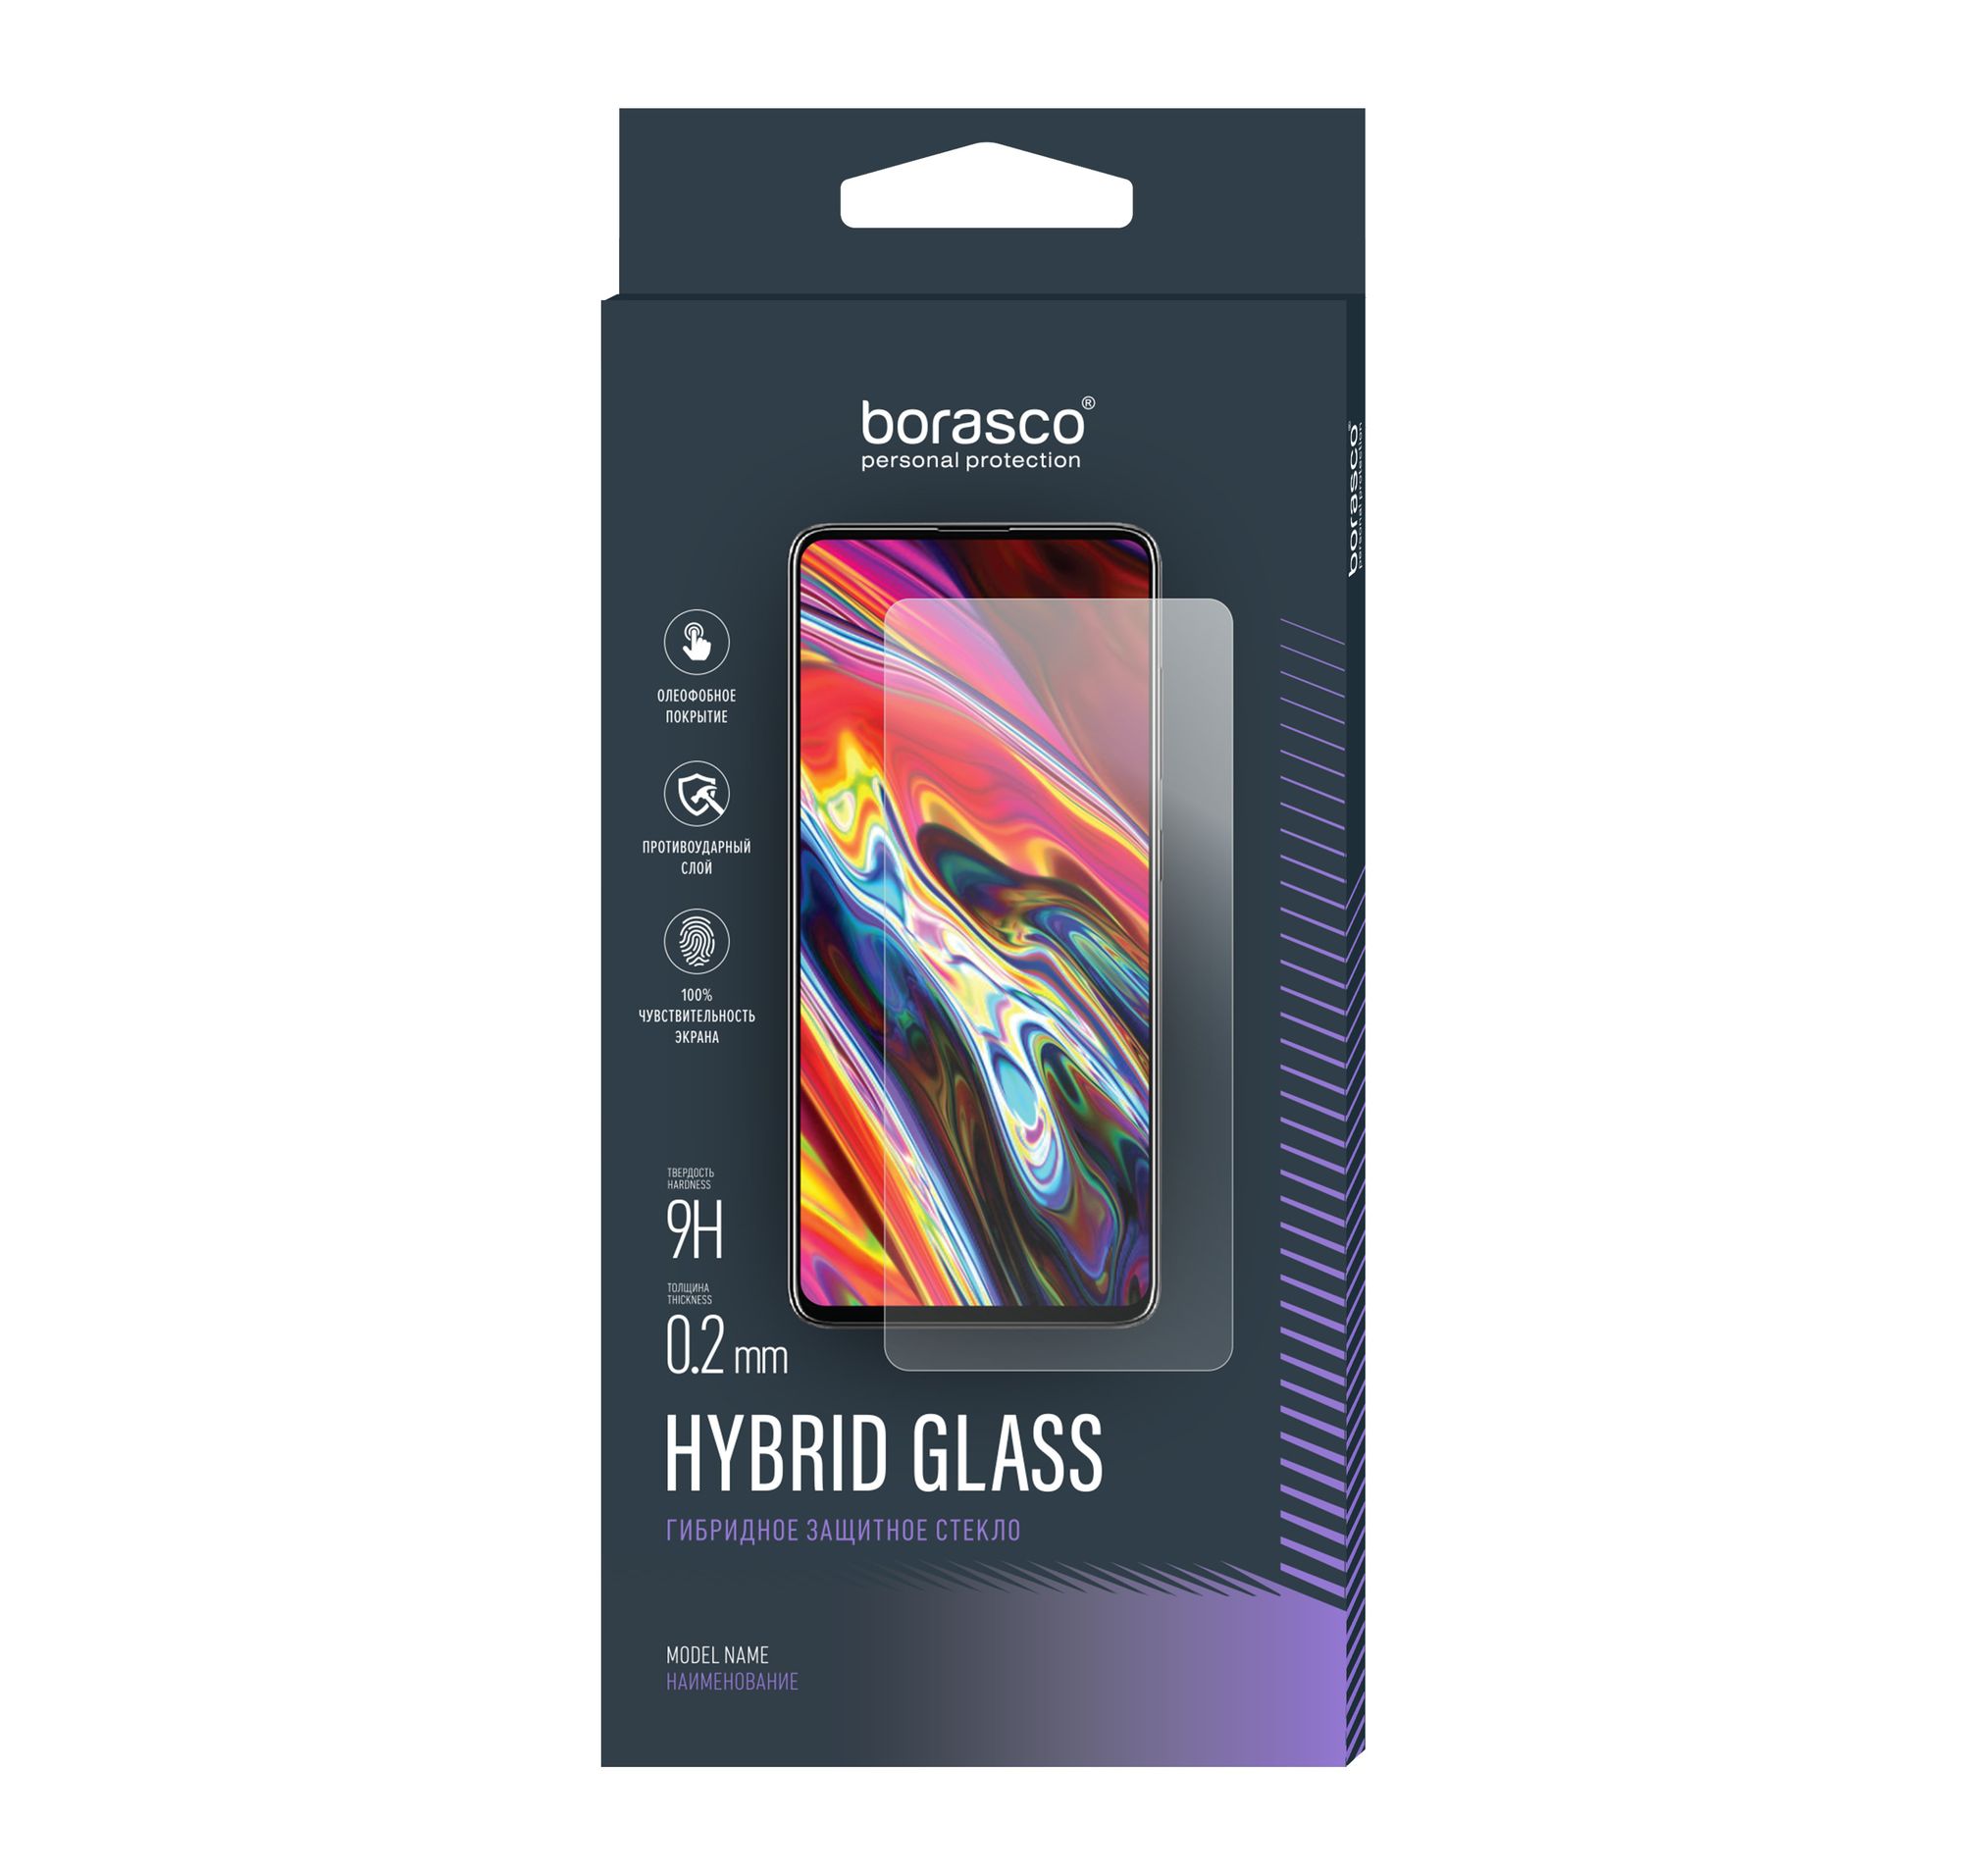 Гибридное стекло Hybrid Glass VSP 0,26 мм для Nokia 2.3 цена и фото